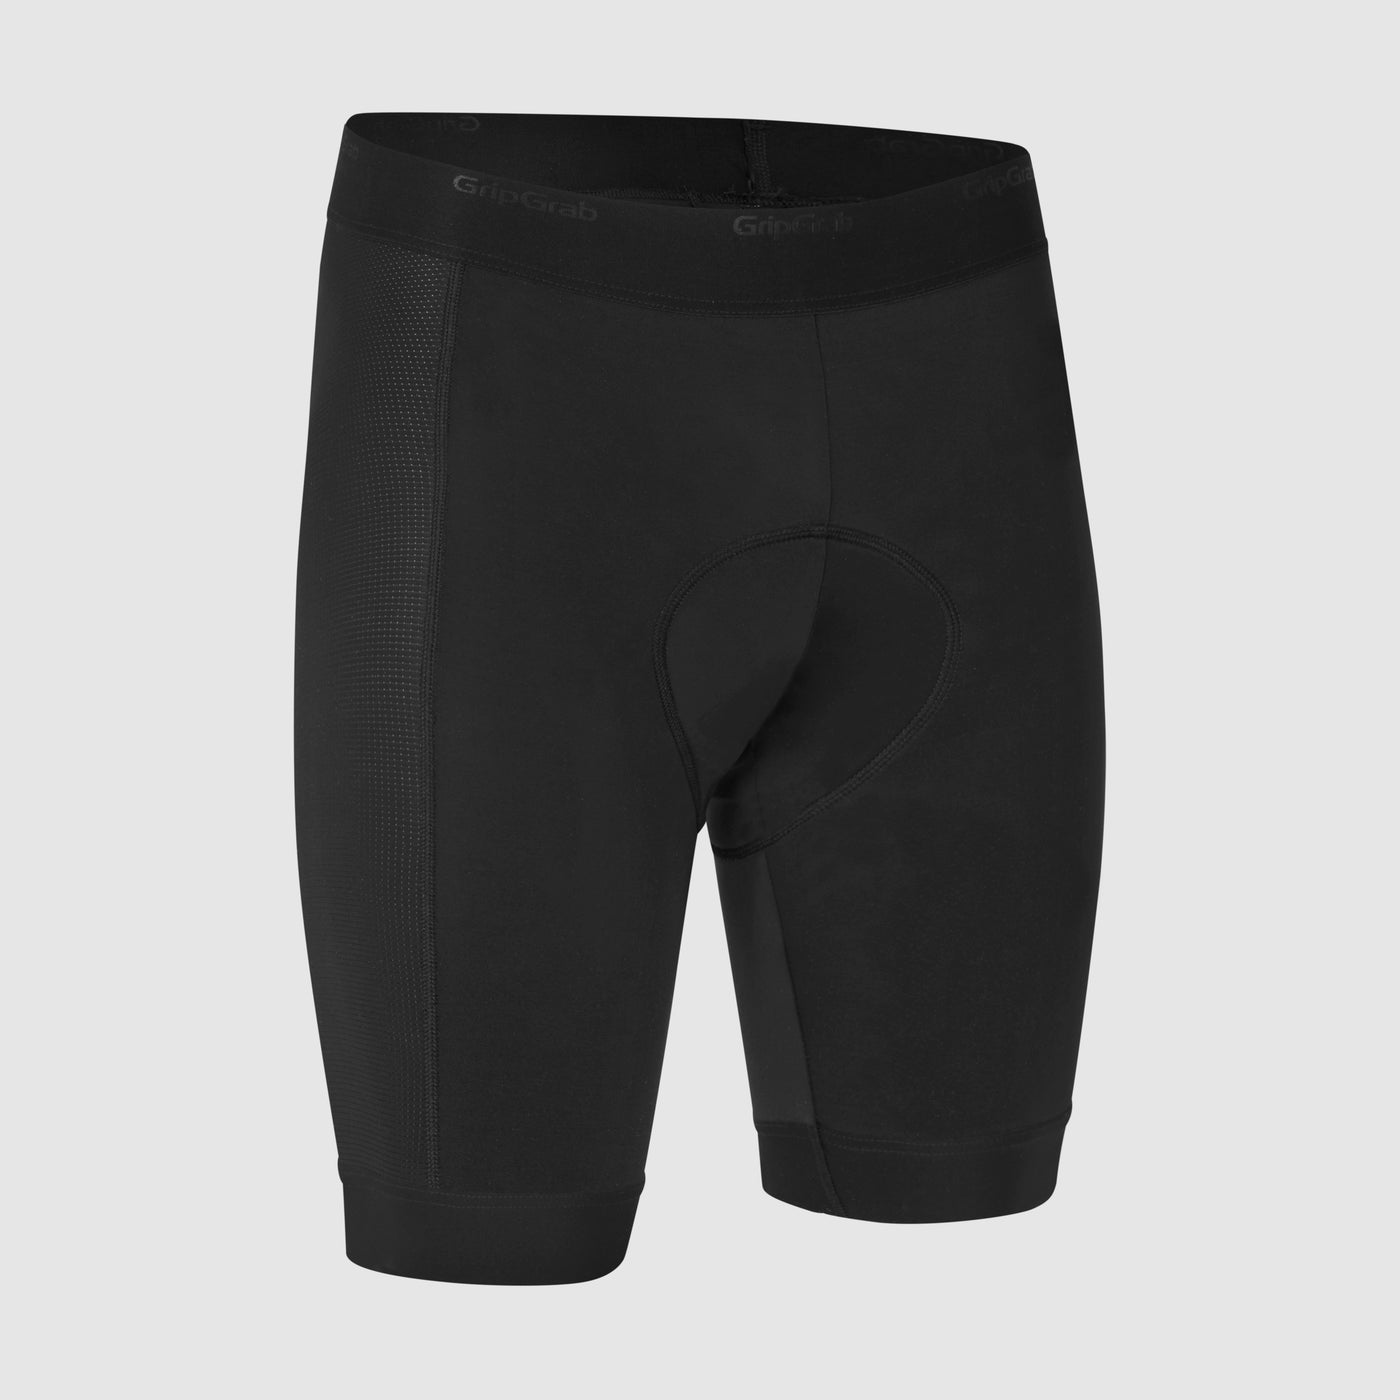 VentiLite Padded Liner Shorts